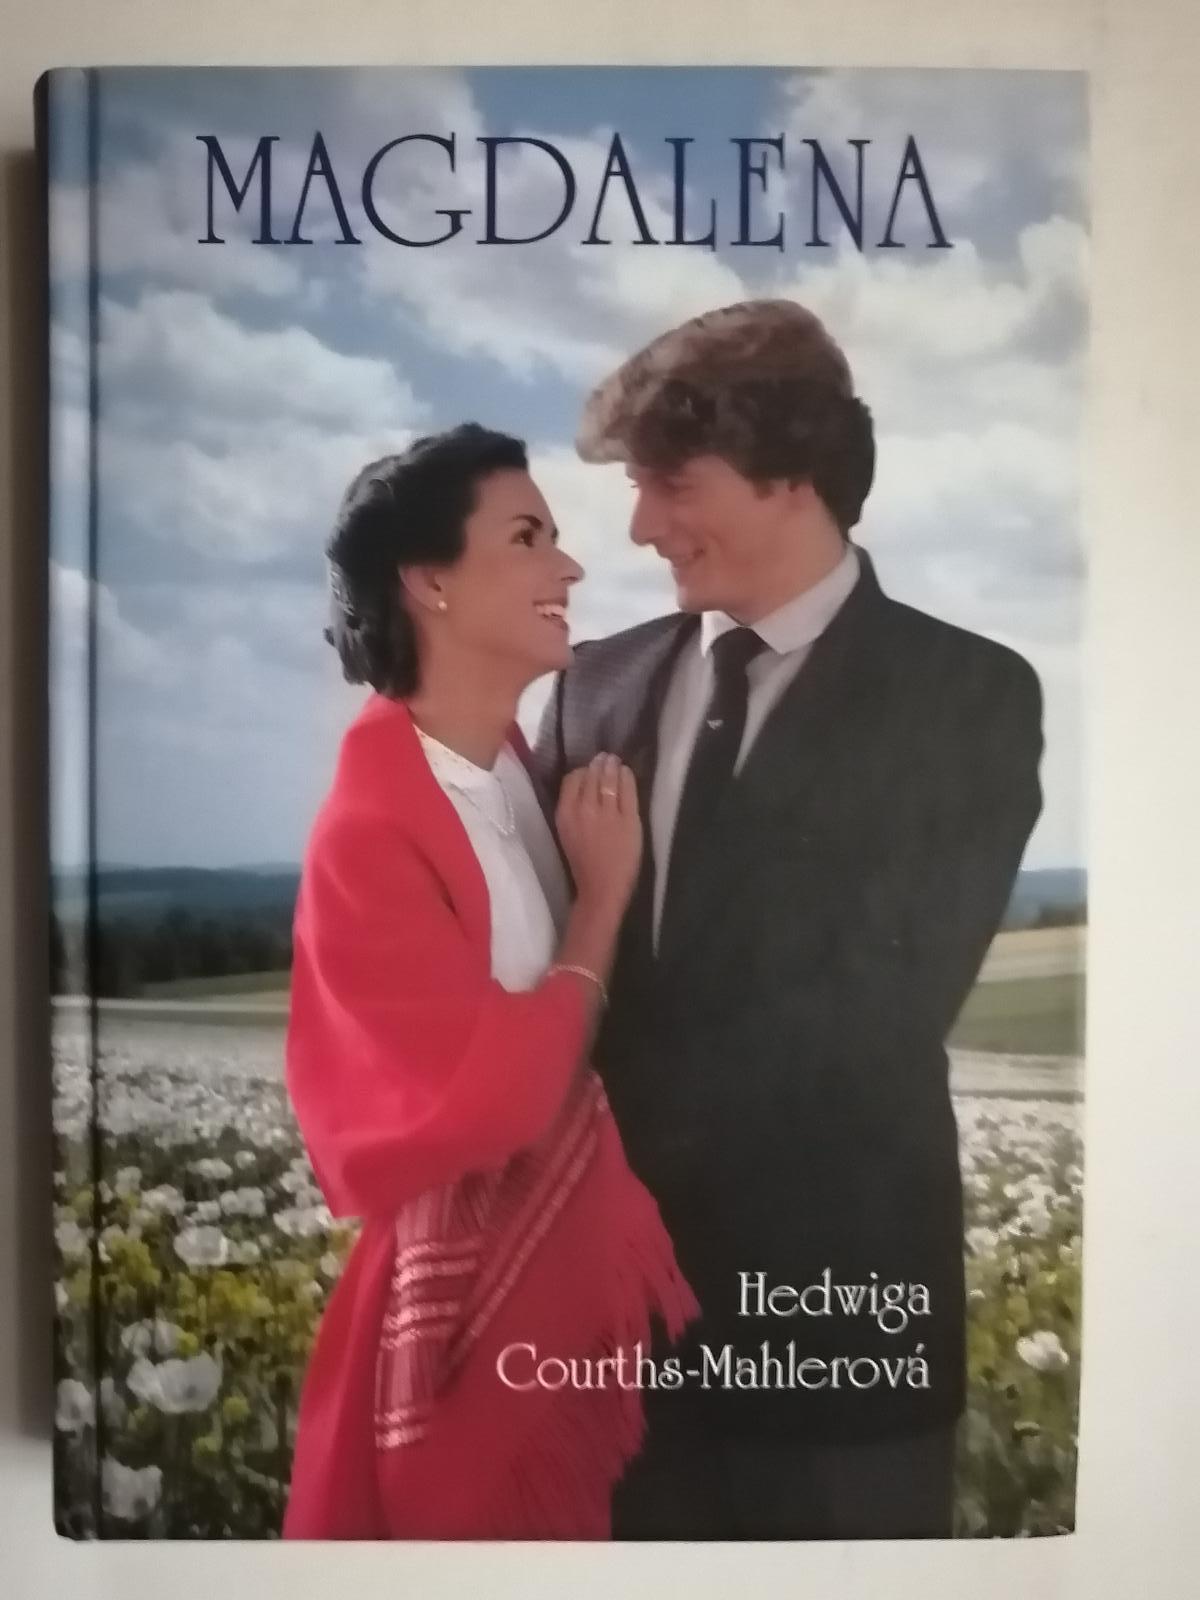 COURTHS-MAHLEROVÁ Hedwiga - Magdalena + Manželstvo naoko - Knihy